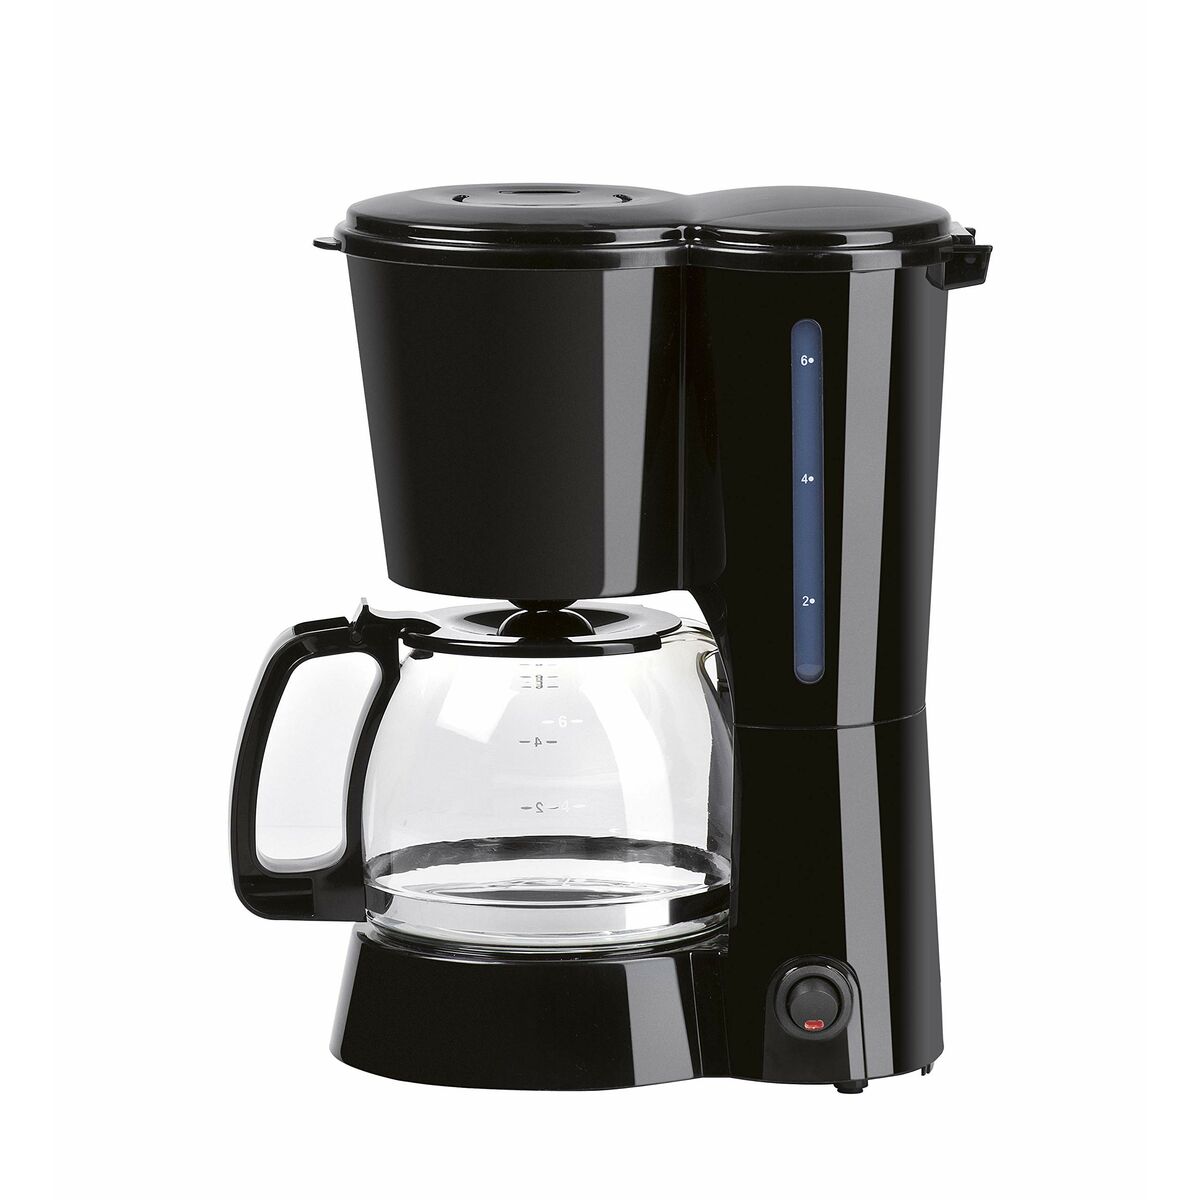 Dryp kaffemaskine g3ferrari g10063 sort 1 l